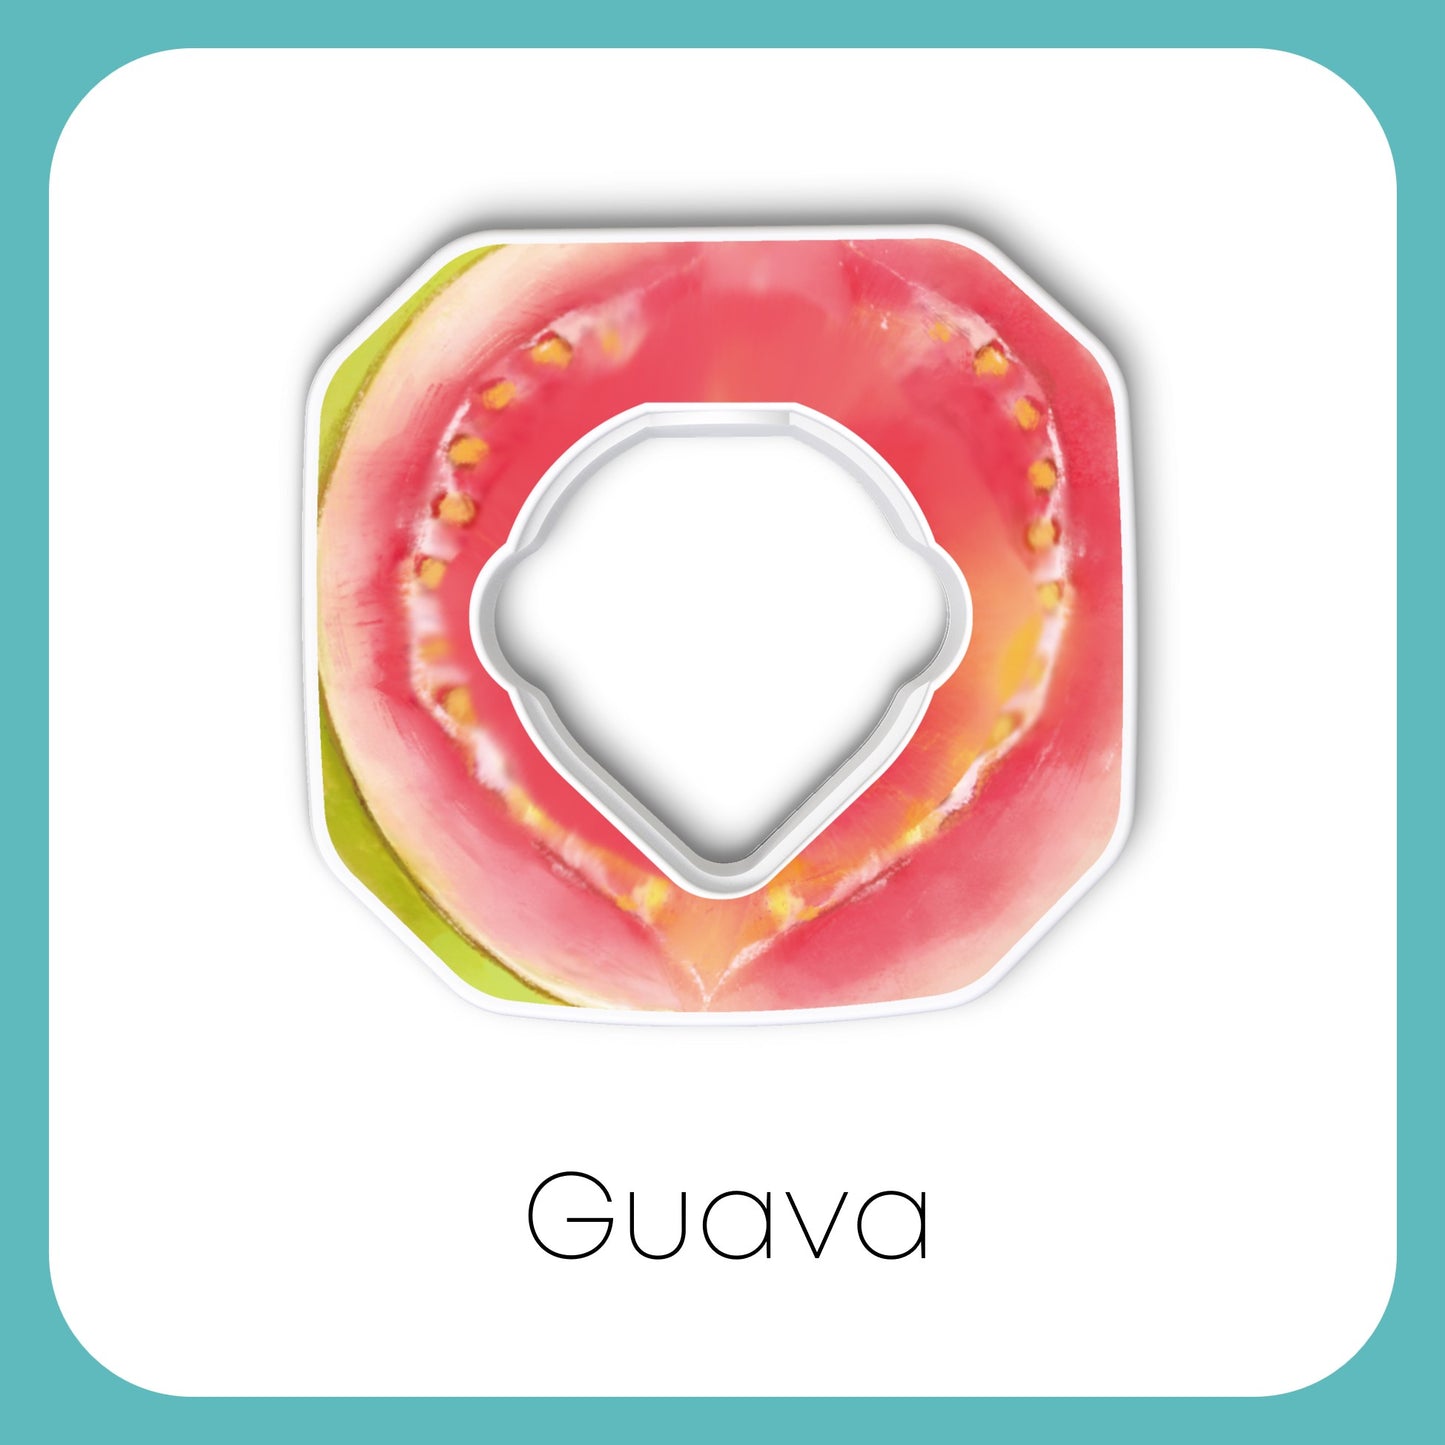 Guava Flavor Pods